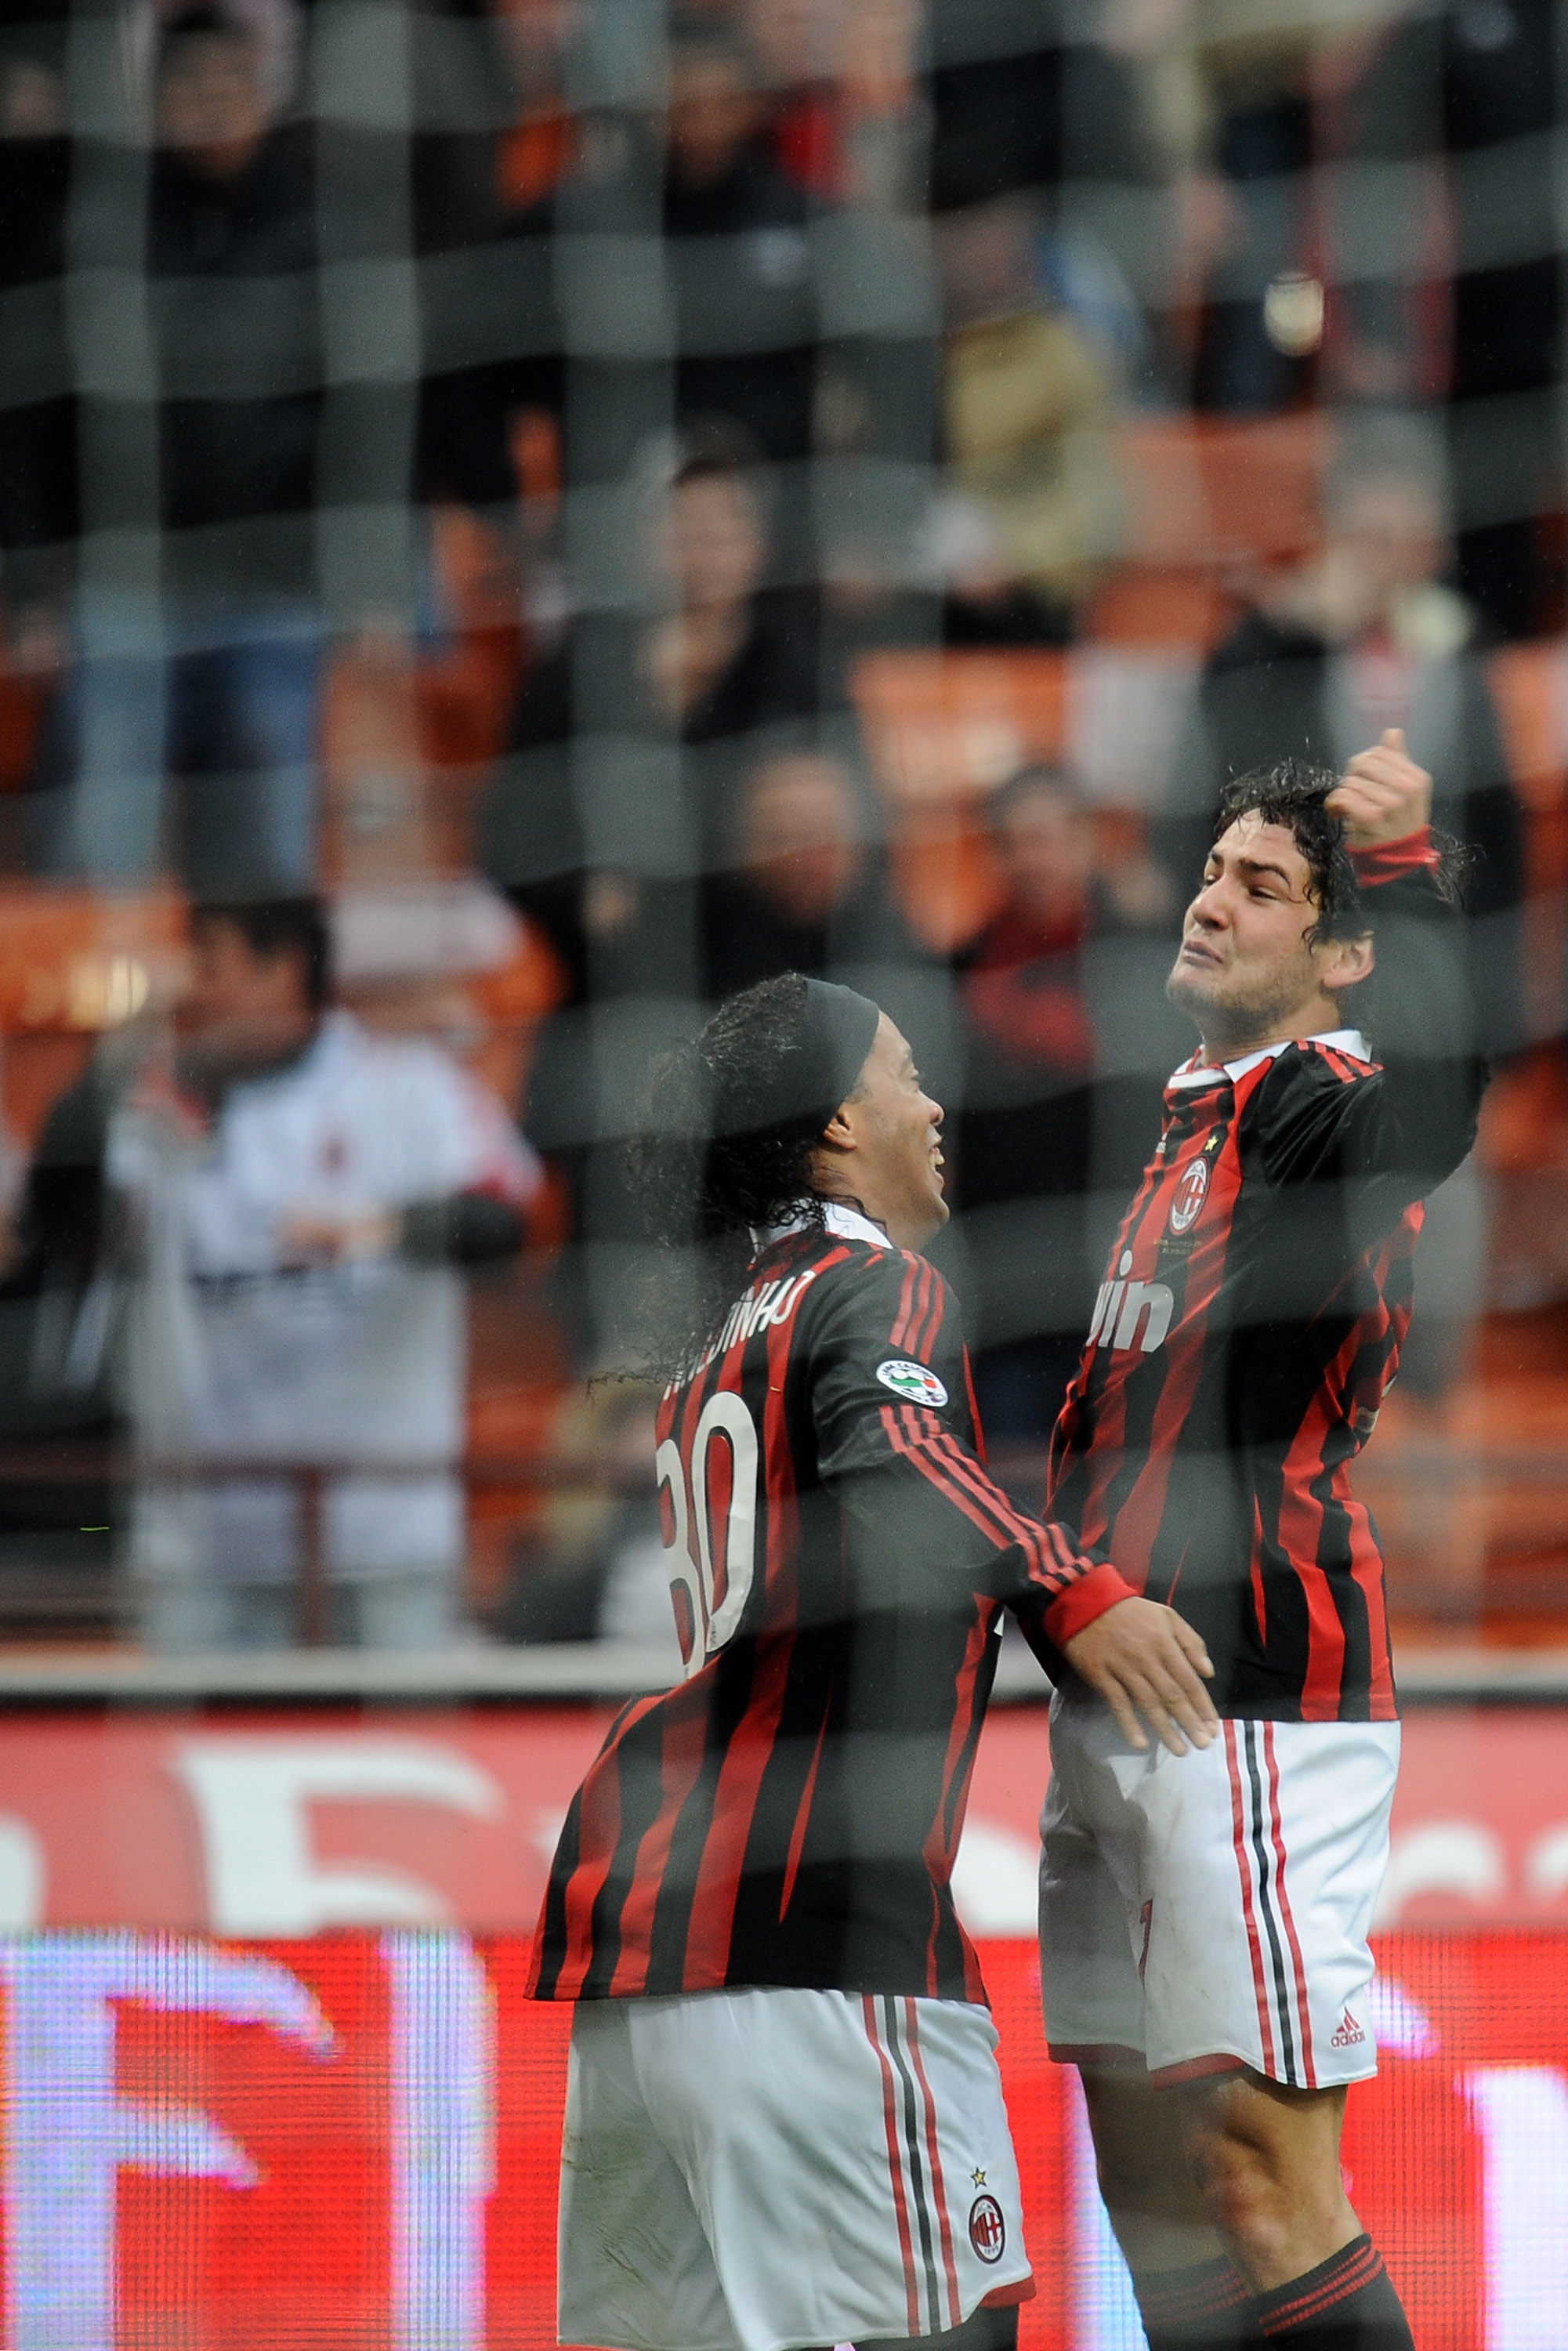 Pato and Ronaldinho- Crucial to Milan's success this season